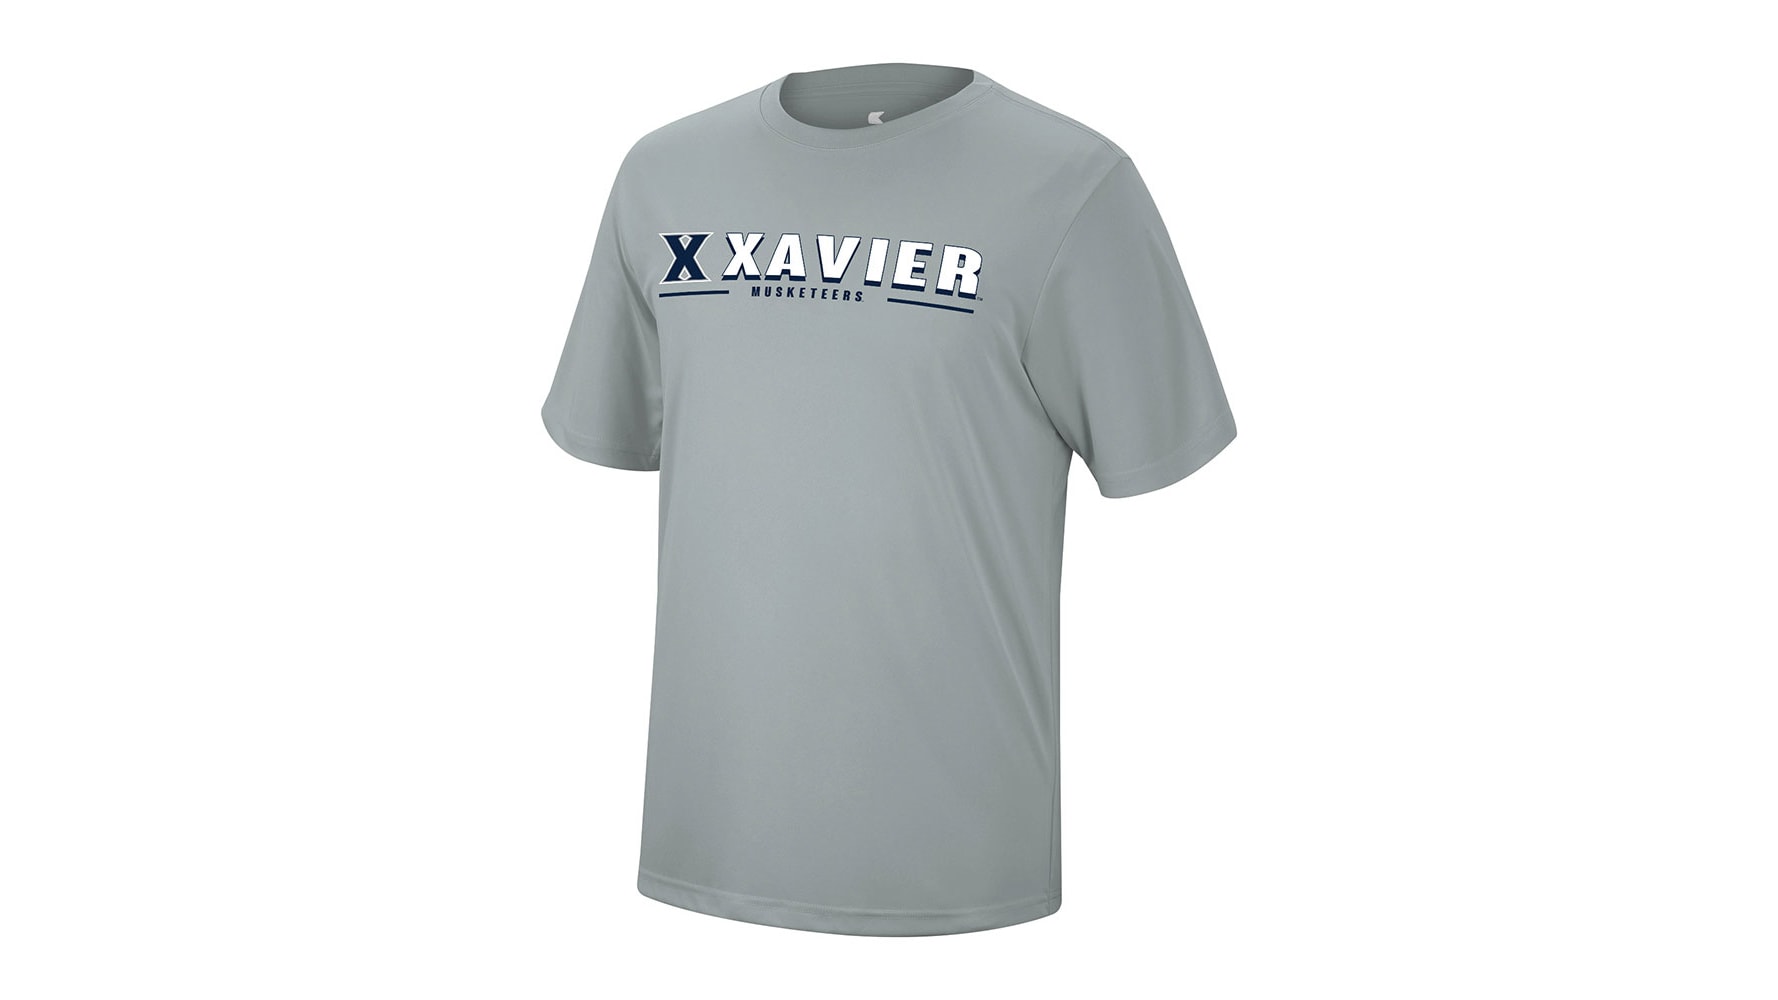 Xavier - NCAA Women's Soccer : Peyton Kohls - T-Shirt Classic